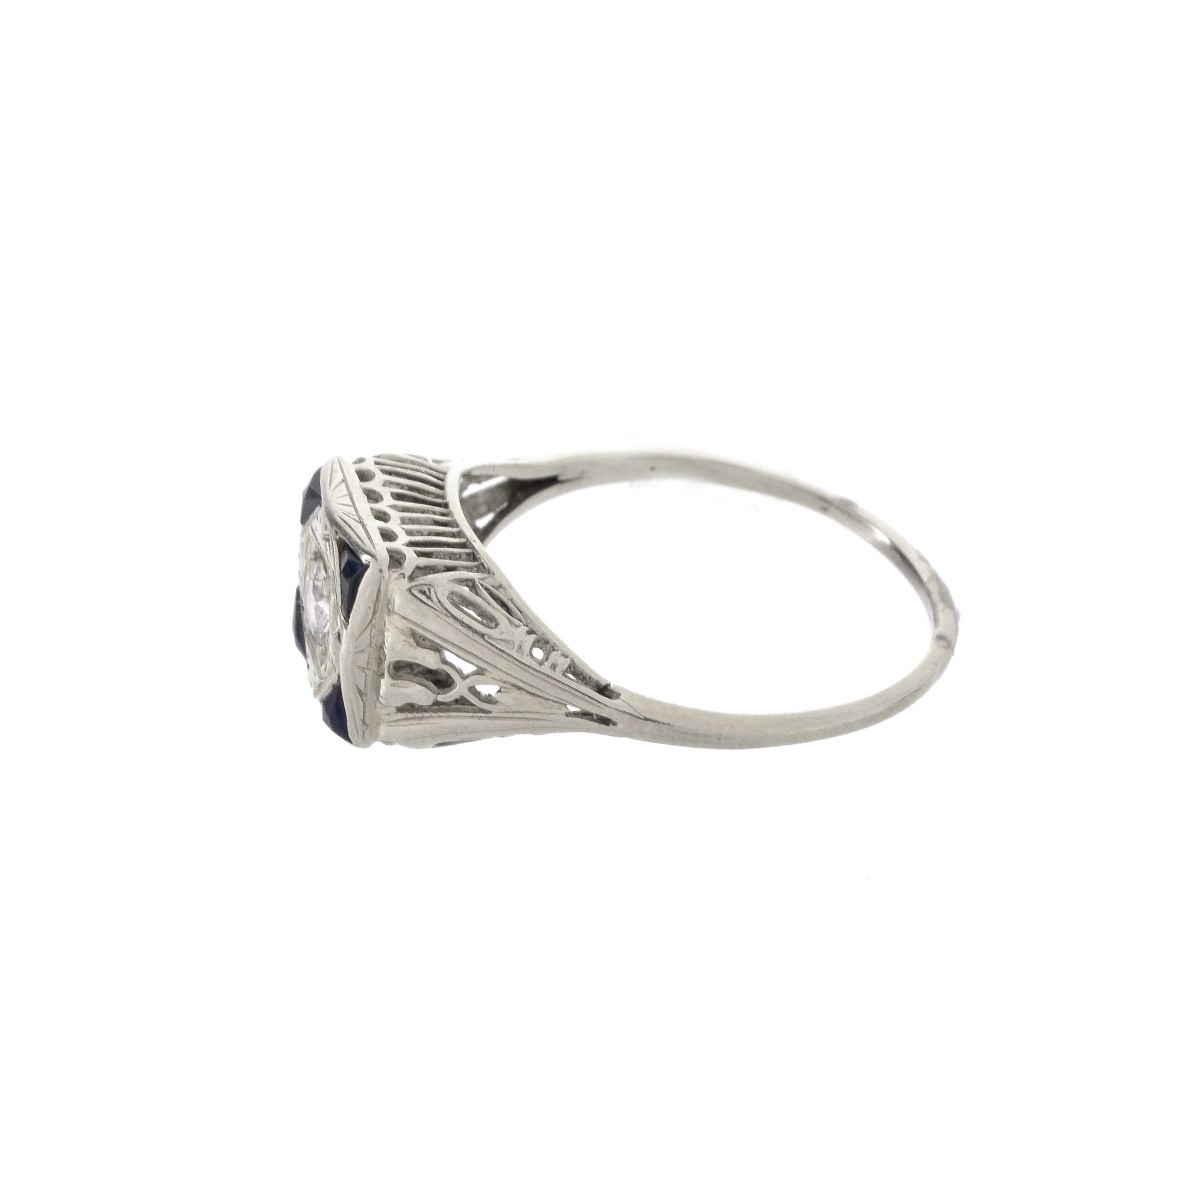 Art Deco Diamond Sapphire and 14K Ring